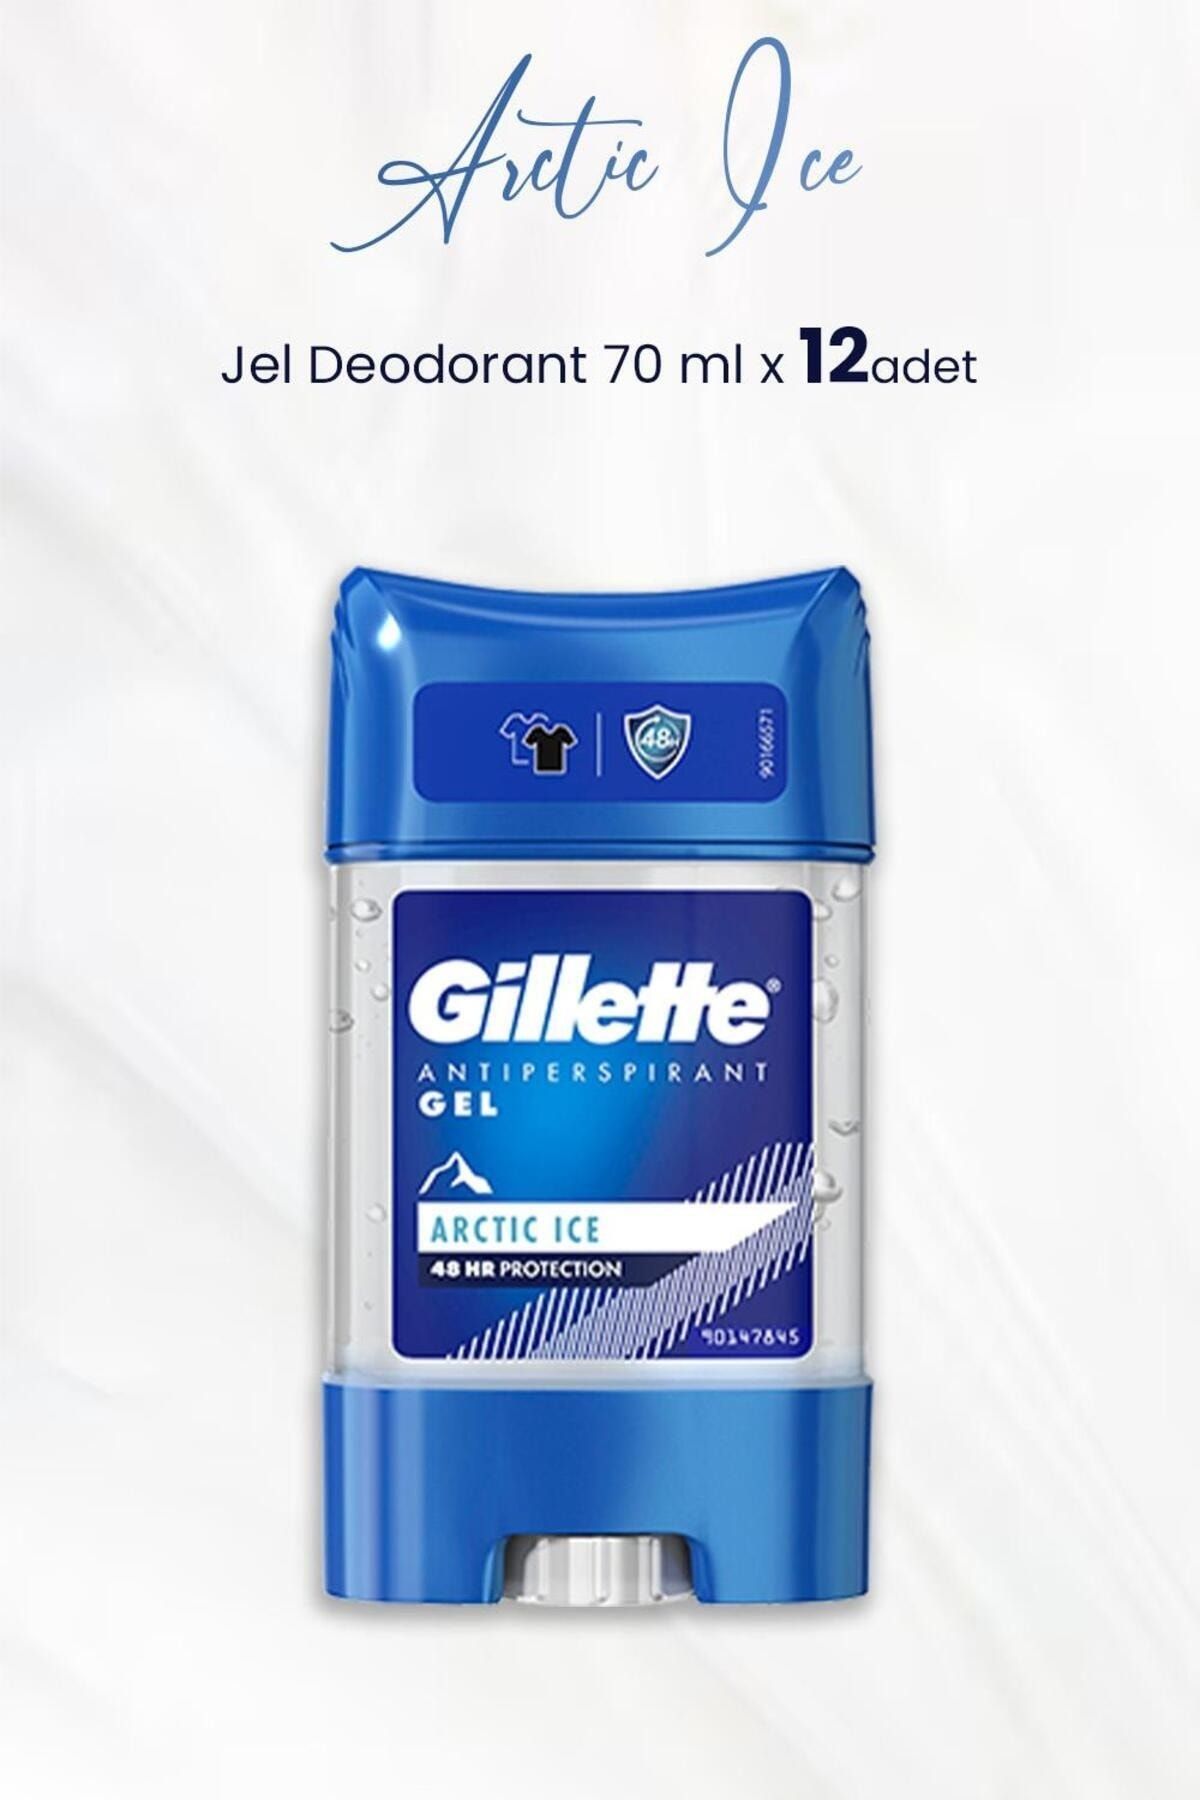 Gillette Antiperspirant Gel Arctic Ice 70 ml x 12 Adet